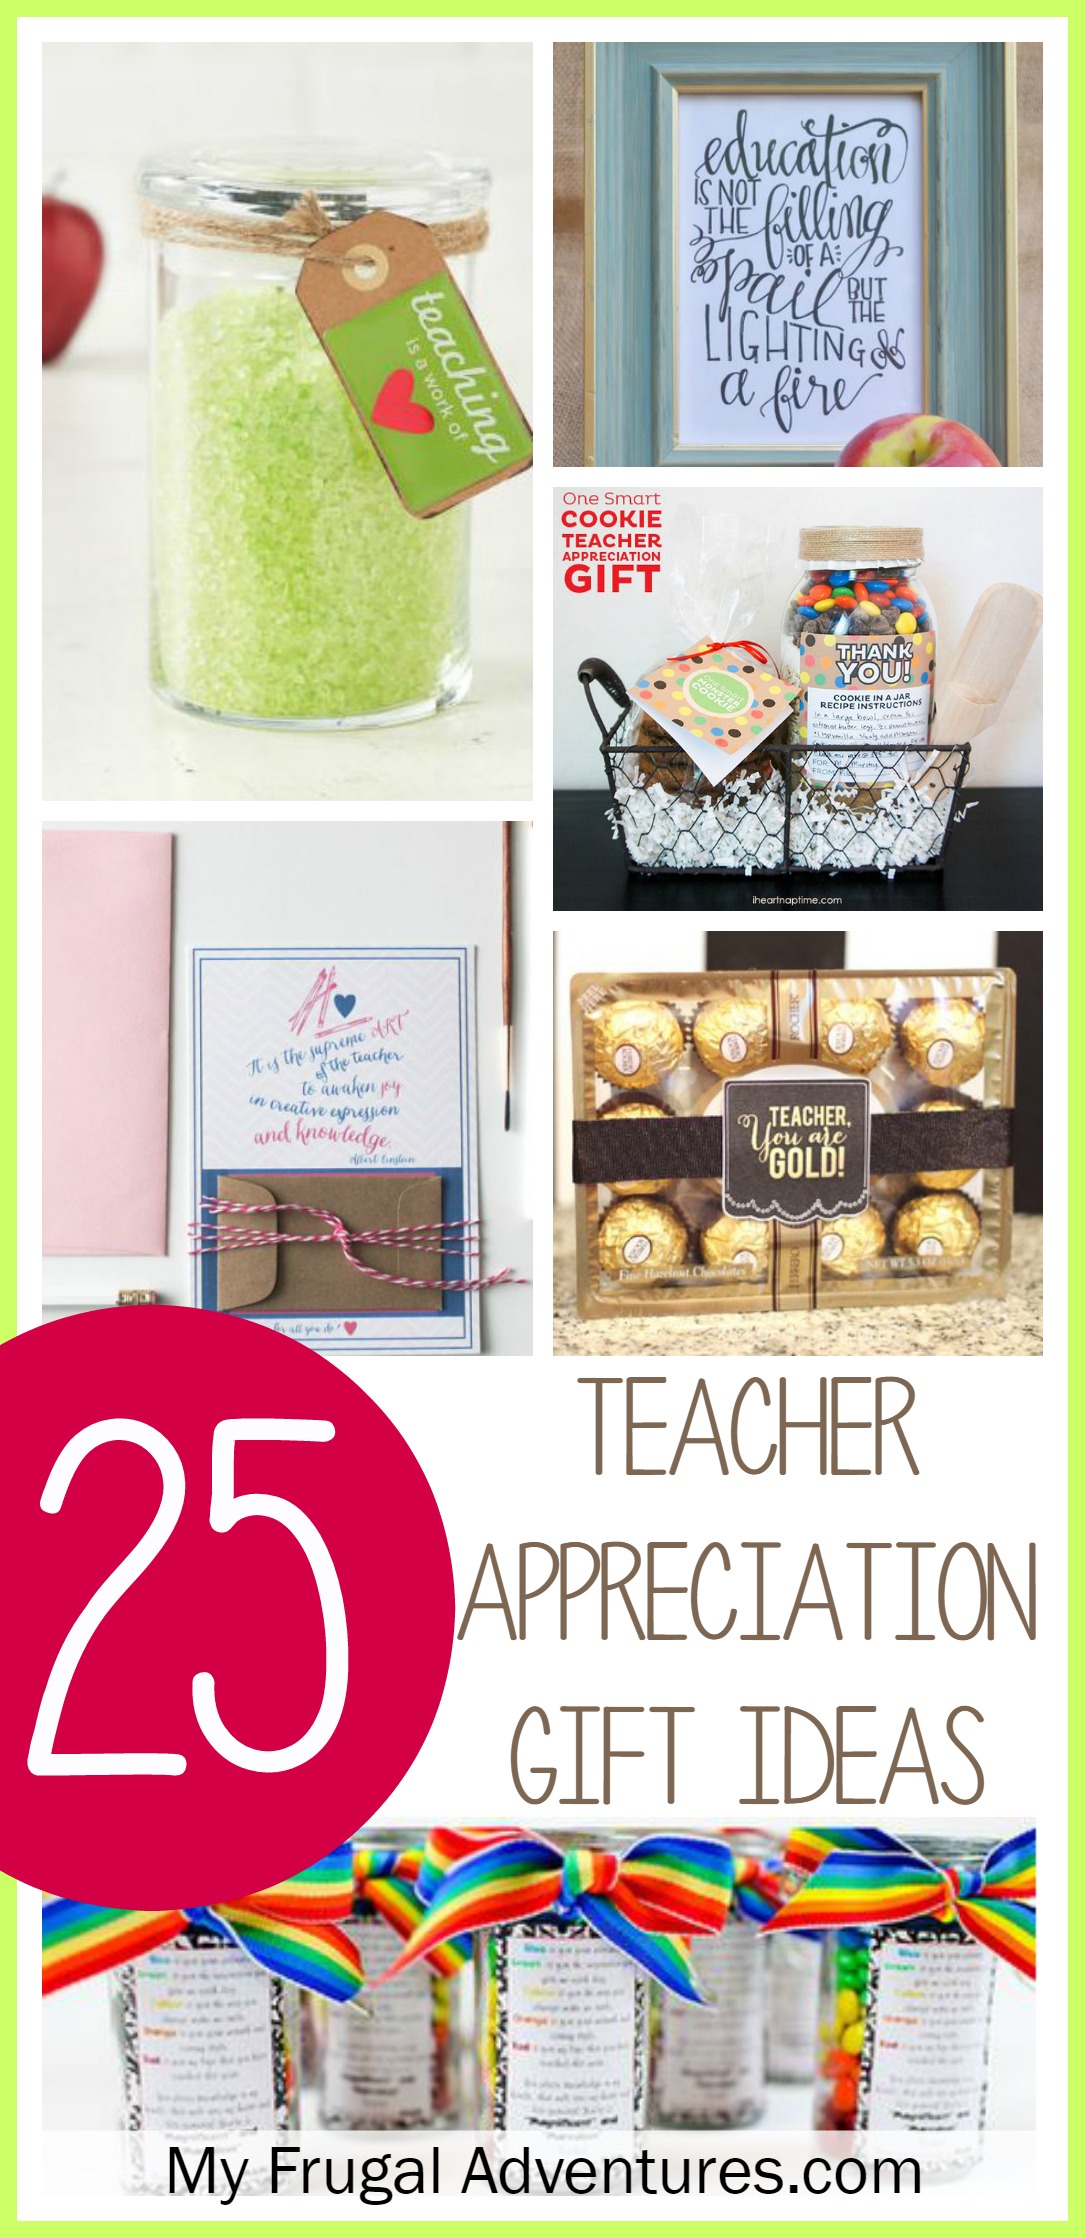 https://myfrugaladventures.com/wp-content/uploads/2015/04/Teacher-Appreciation-Gift-Ideas-.jpg